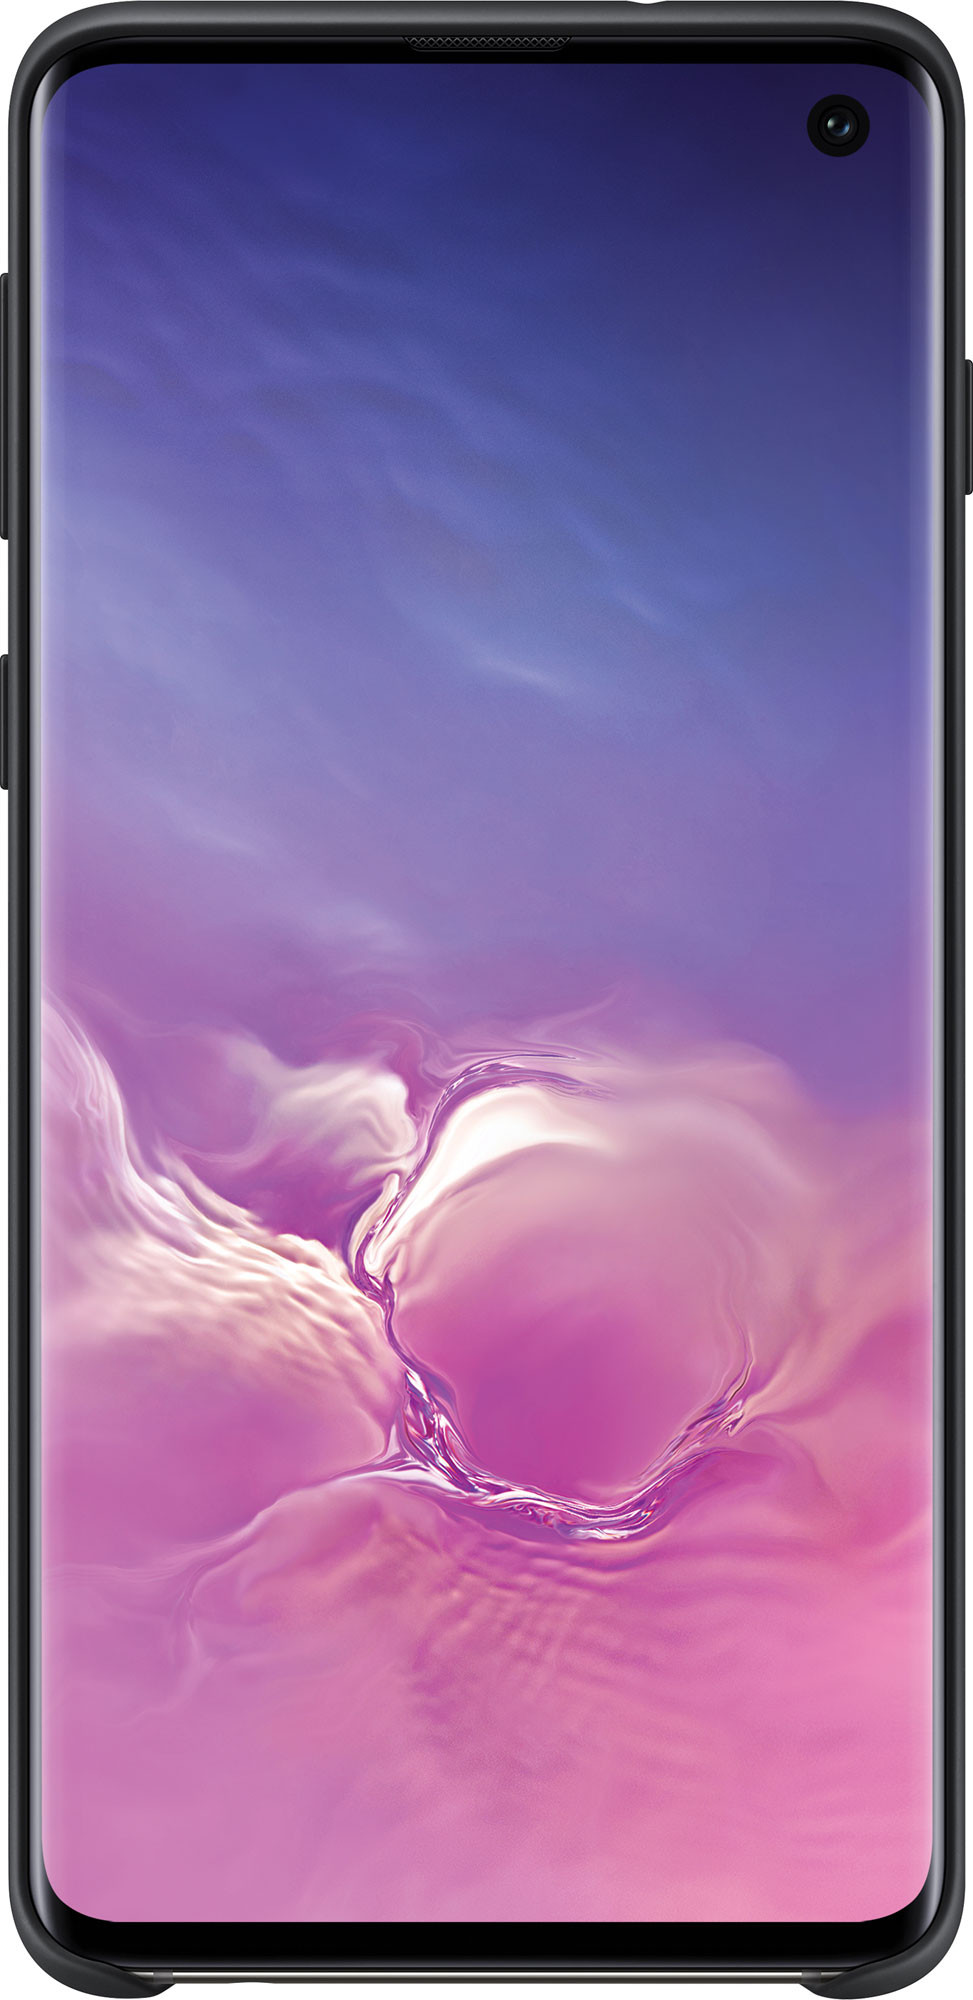 Чохол Silicone Cover для Samsung Galaxy S10 Black